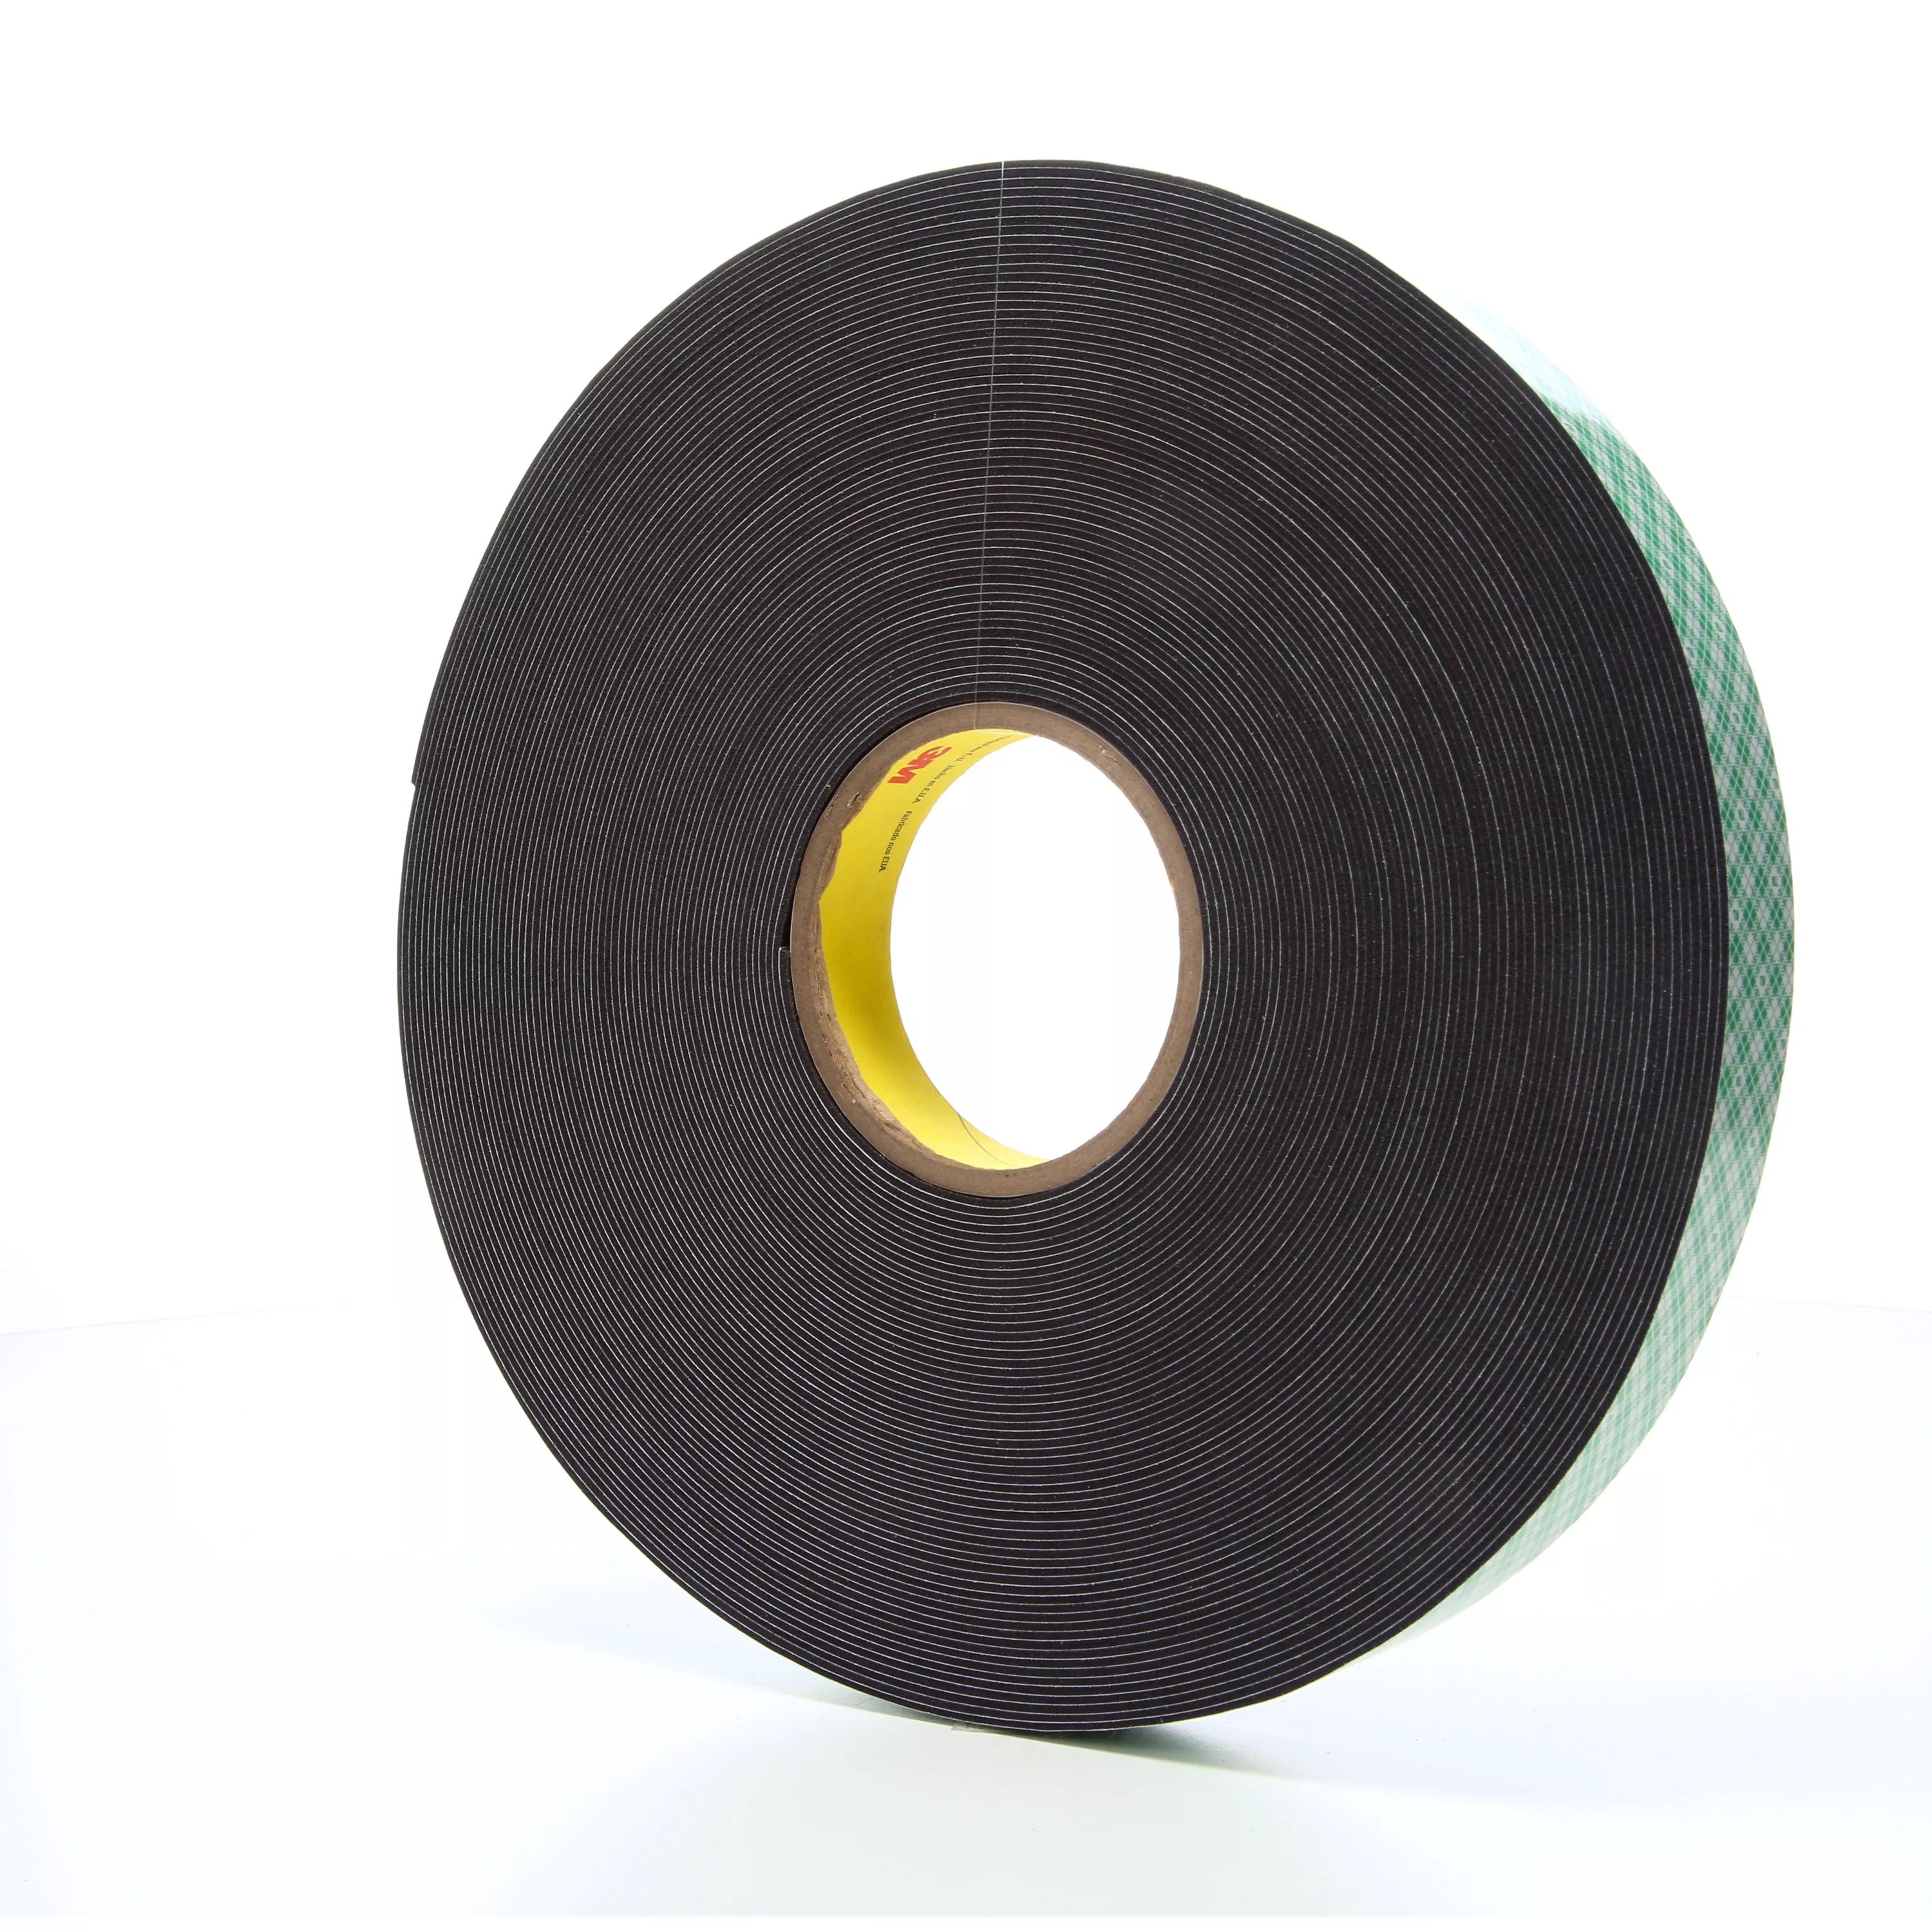 3M™ Double Coated Urethane Foam Tape 4056, Black, 1 in x 36 yd, 62 mil,
9 Roll/Case